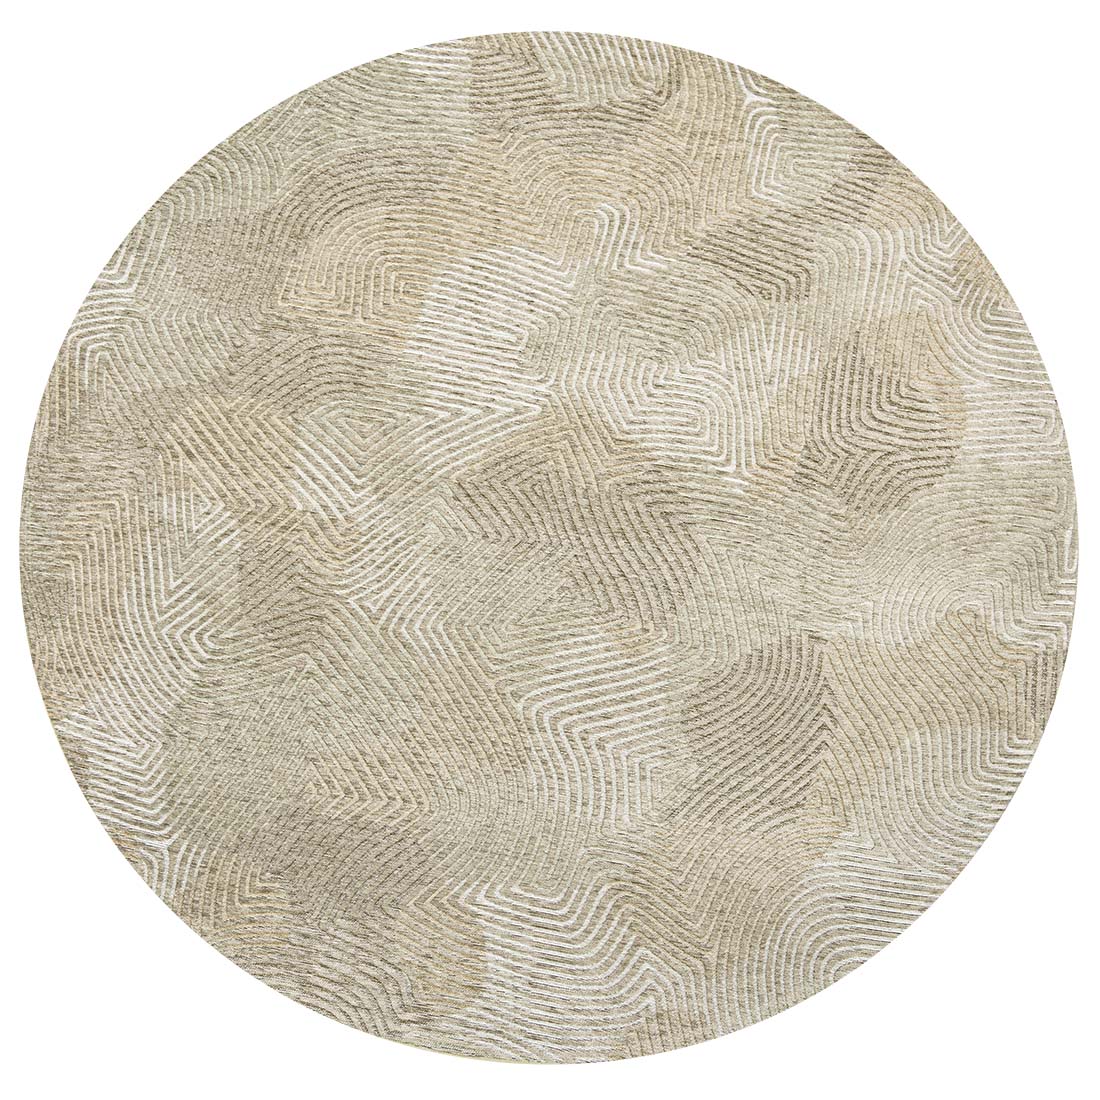 beige flatweave circle rug with organic, textured pattern
